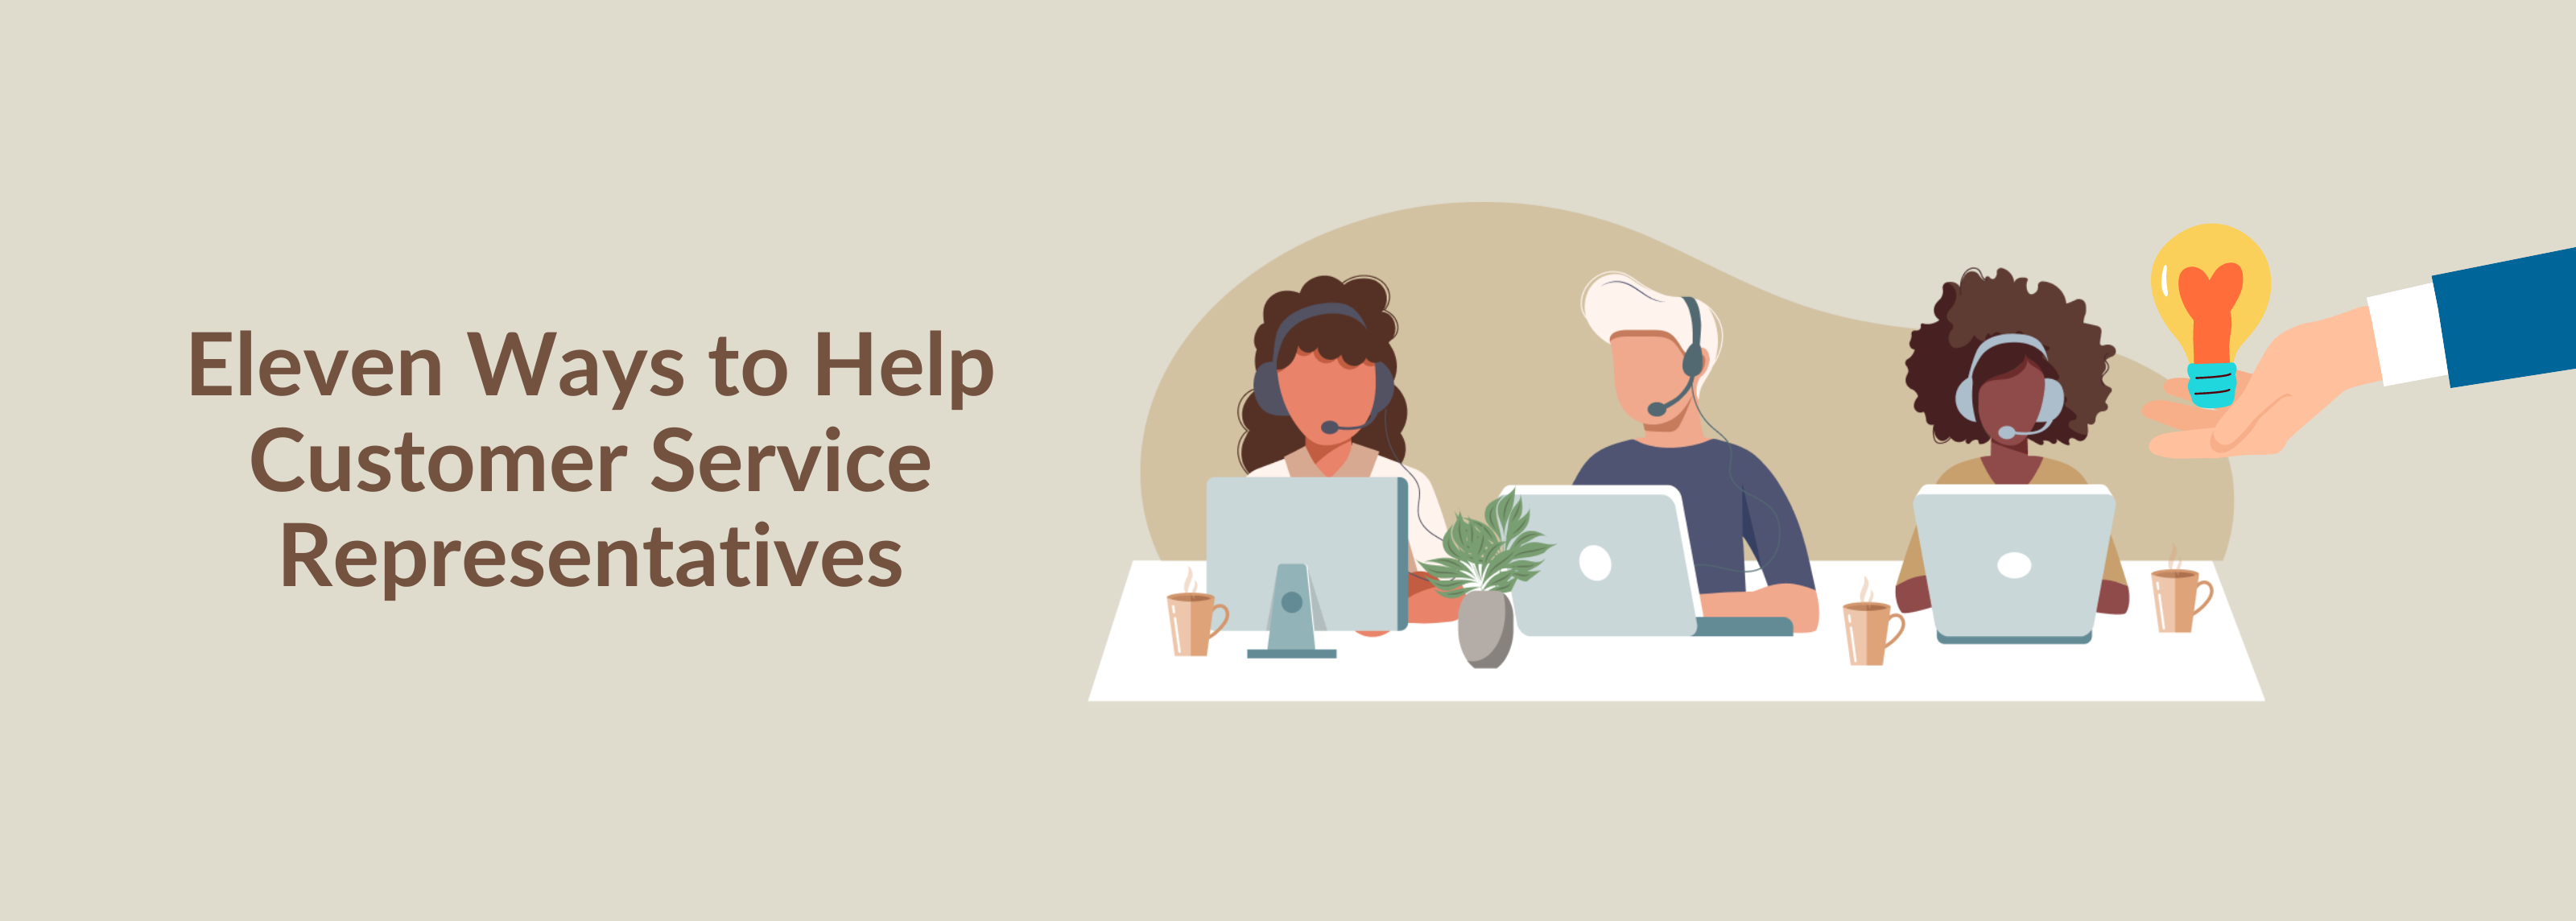 Ways to Help Customer Service Representatives